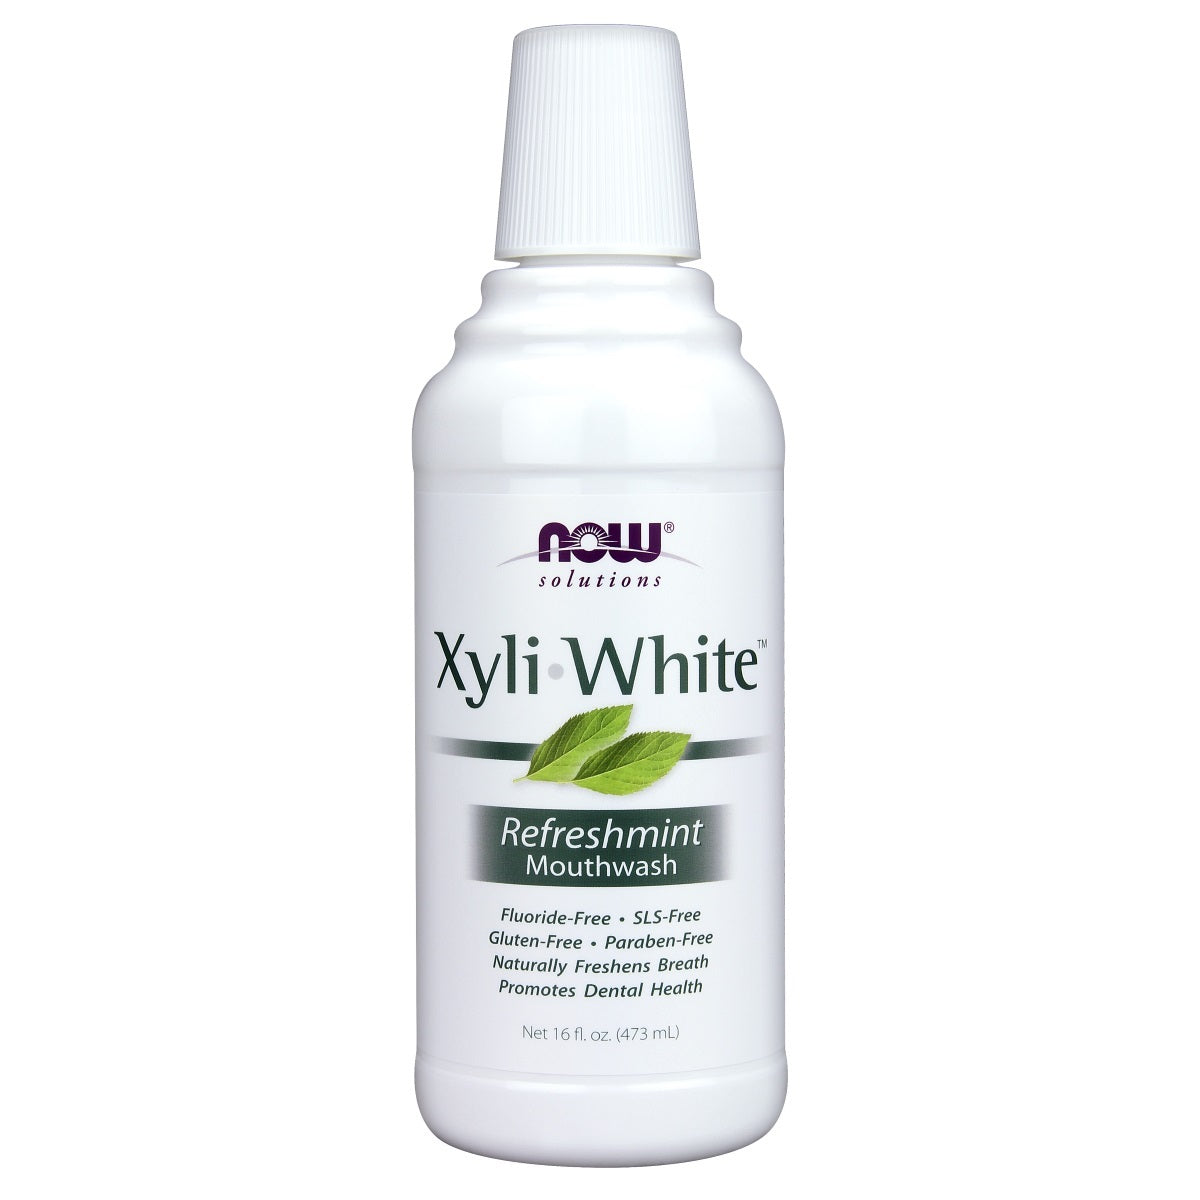 Primary image of XyliWhite Refreshmint Mouthwash